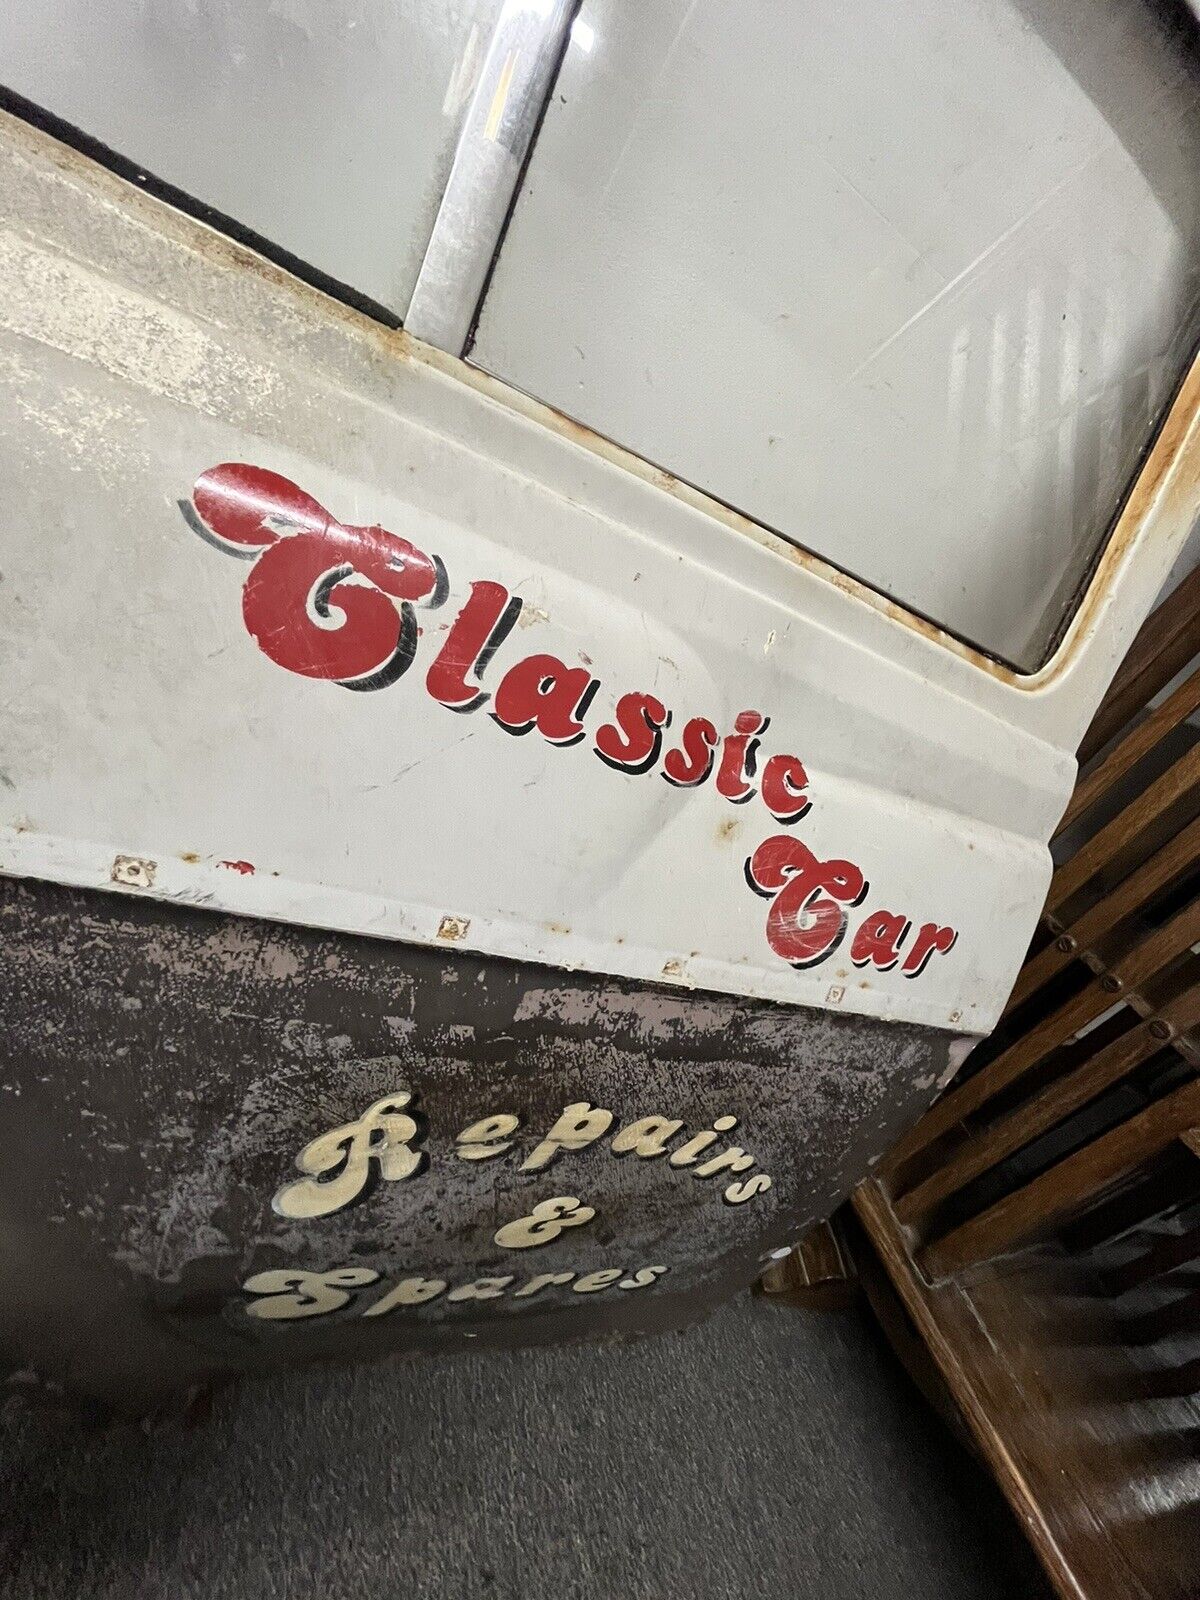 Classic Car Garage Shop Sign.